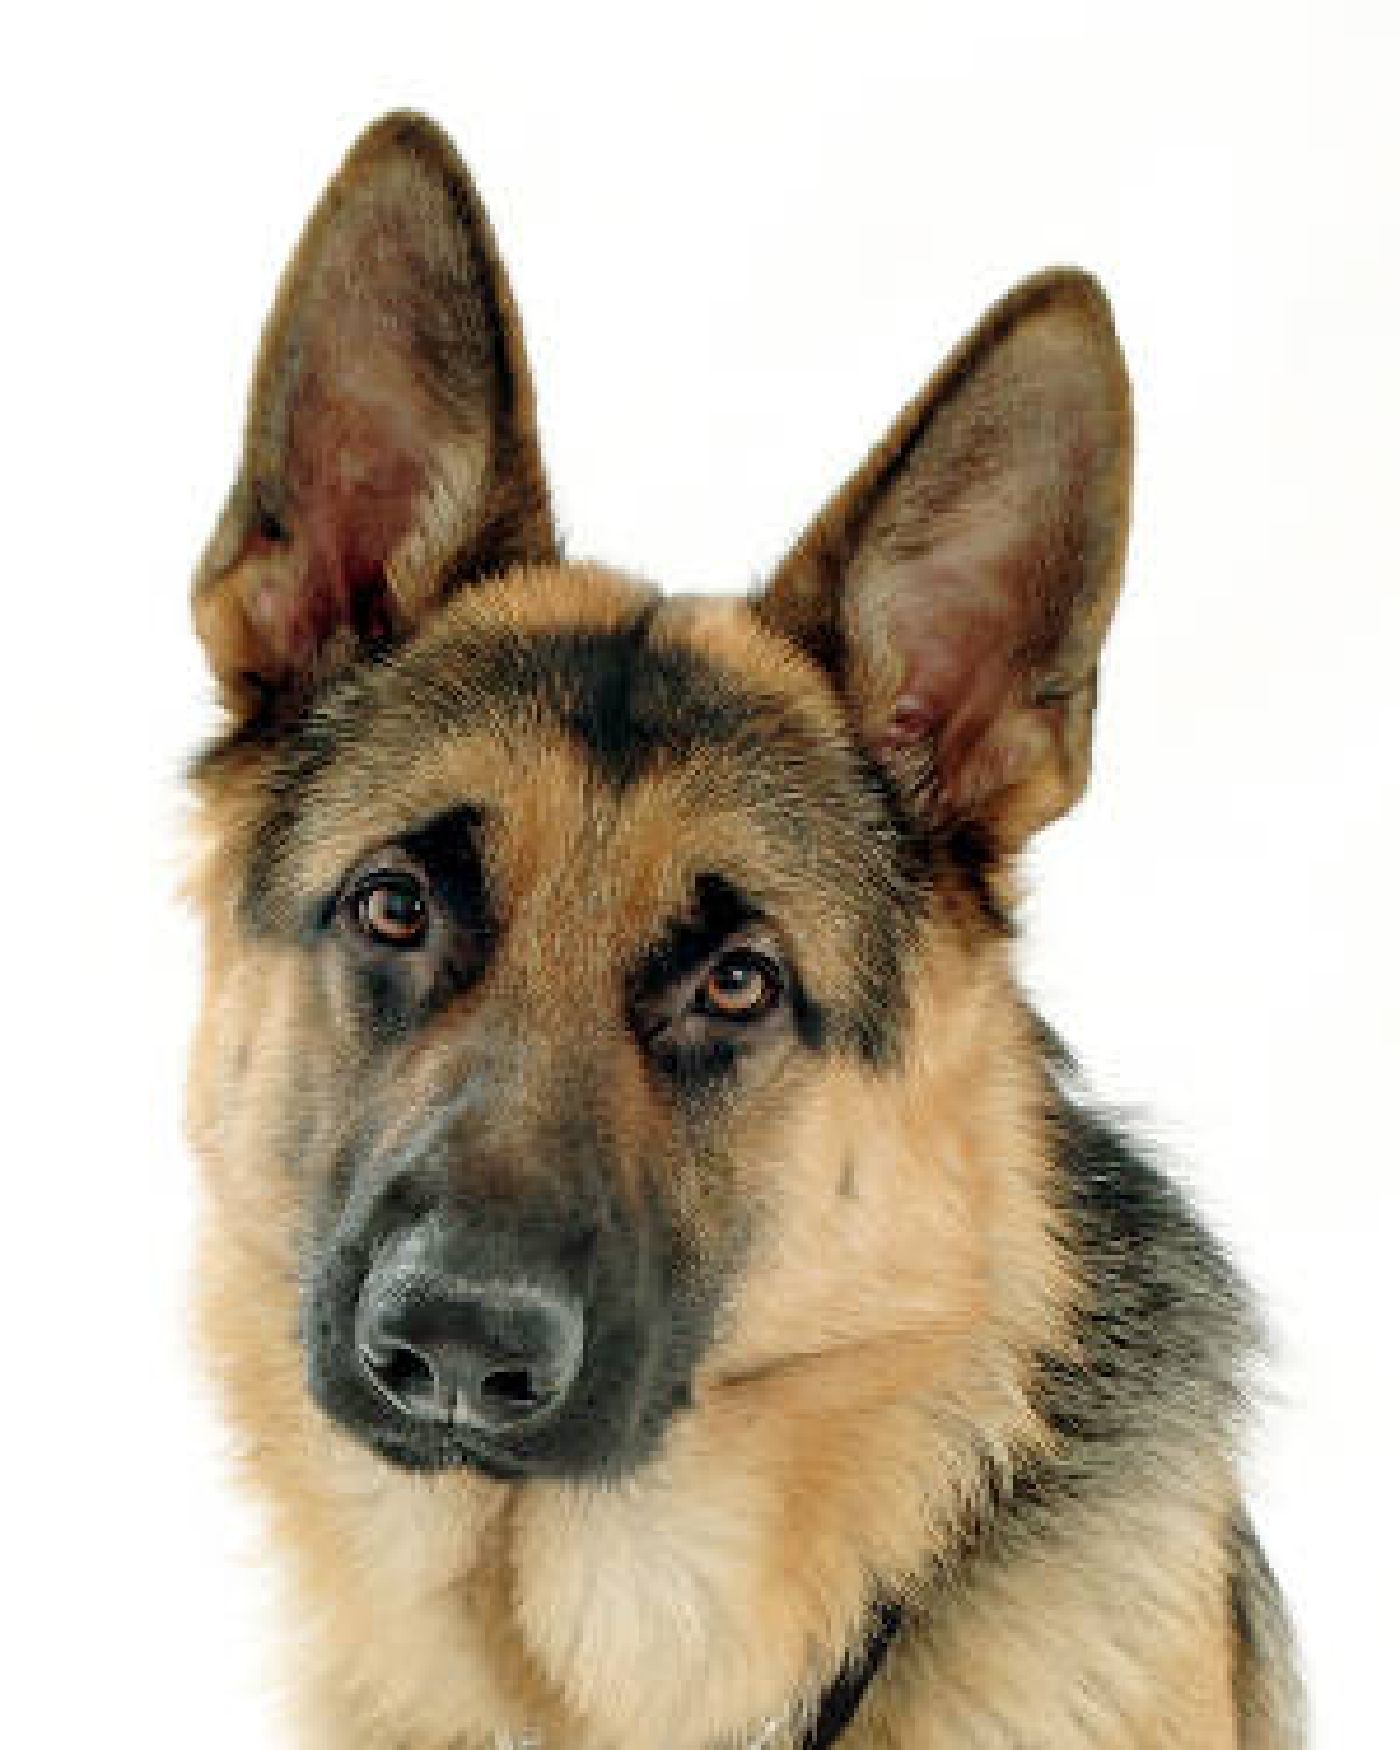 Image of a German Shepherd's face